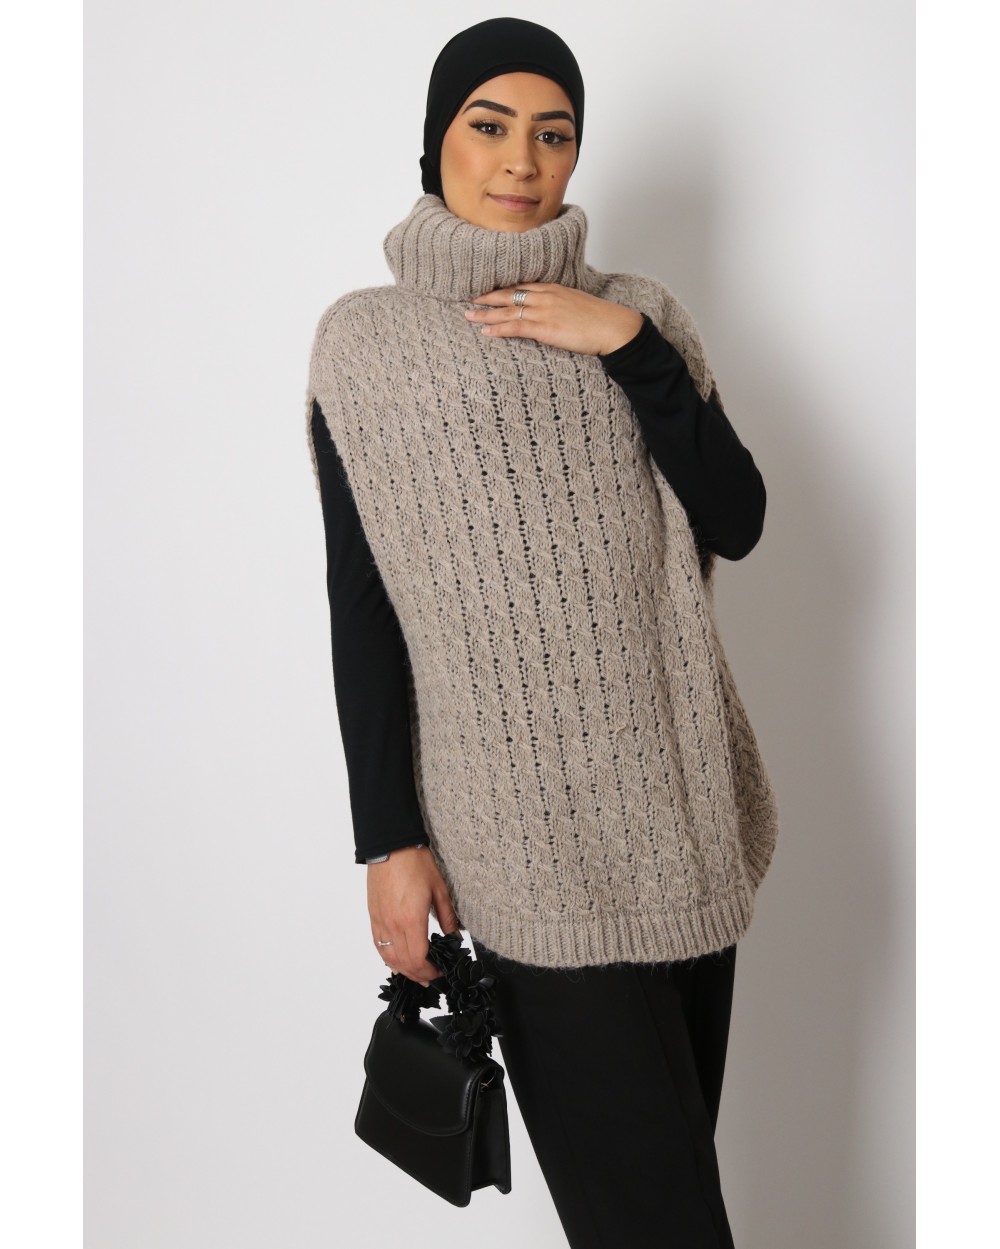 Rita sleeveless knitted sweater with turtleneck